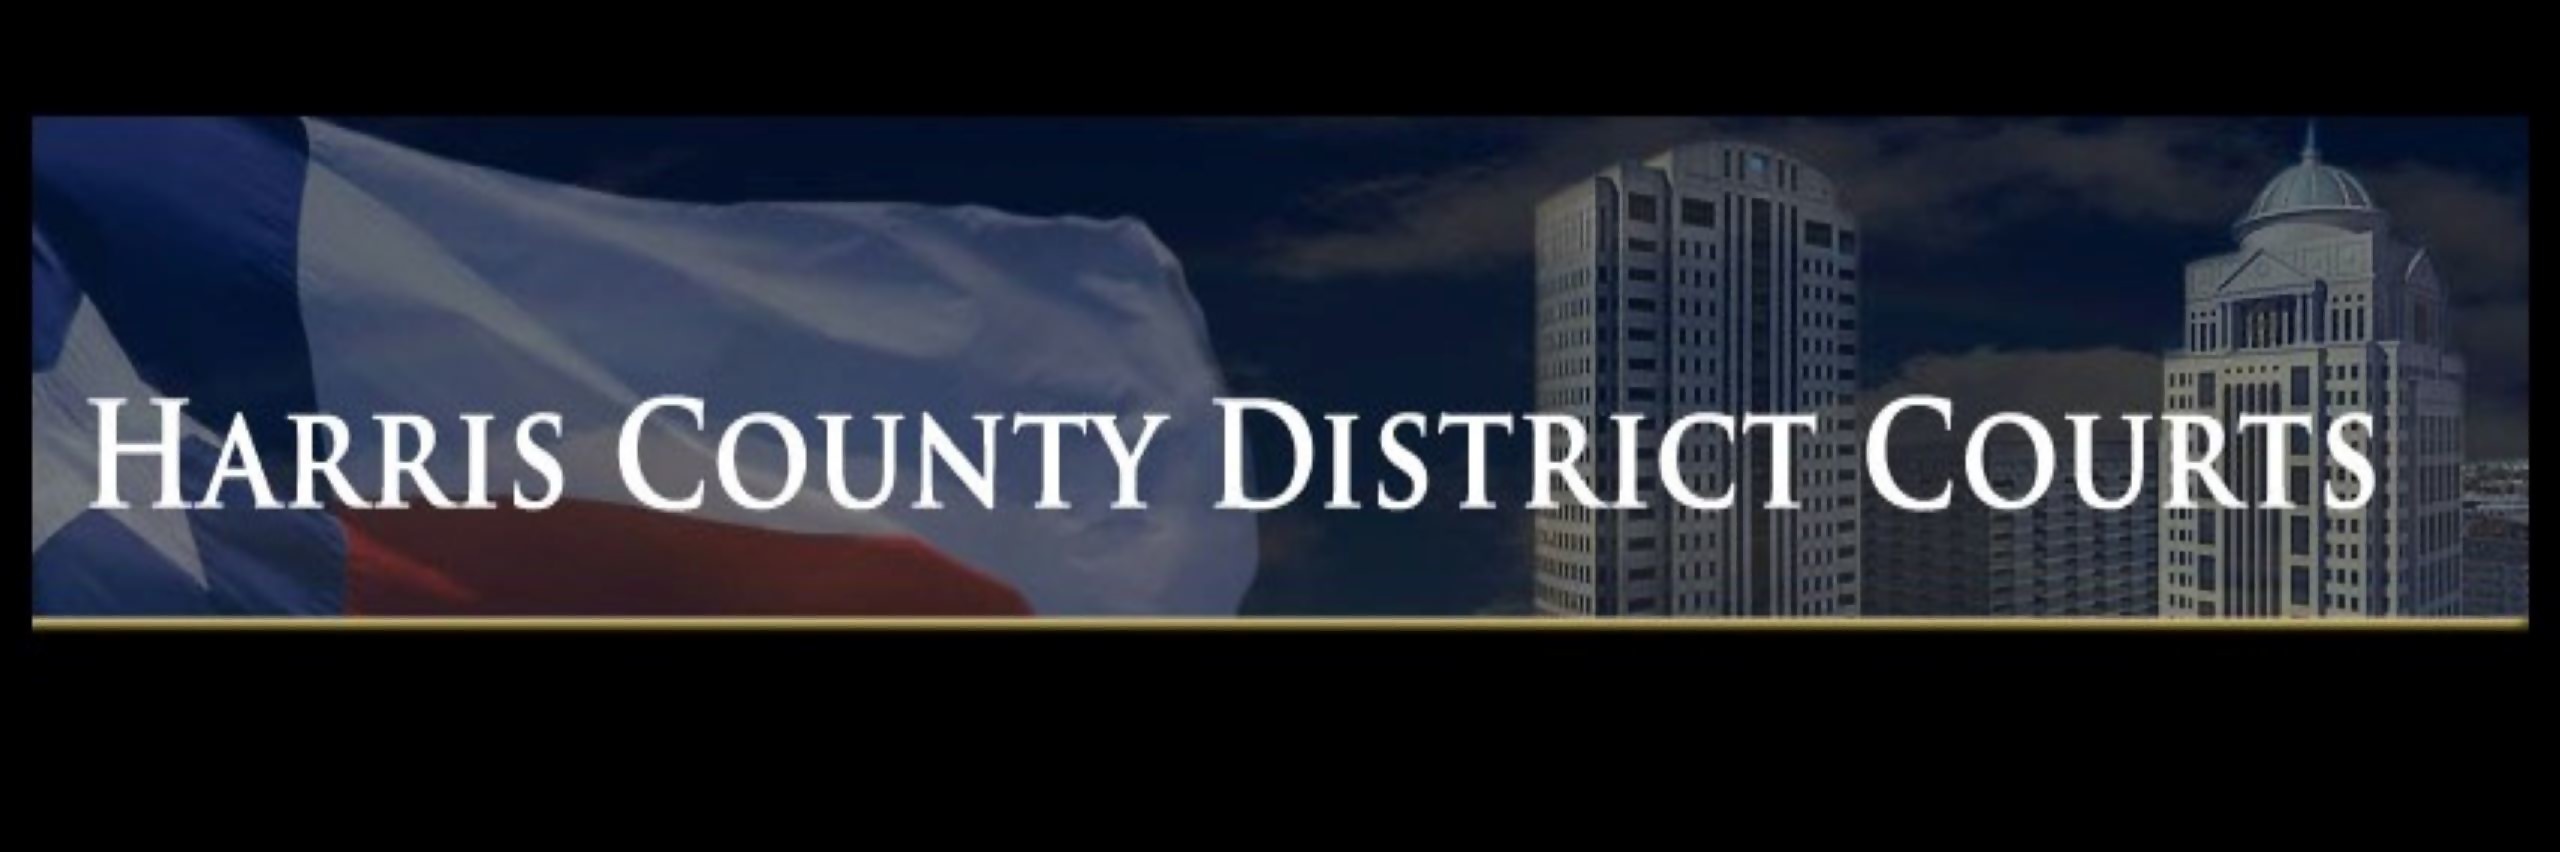 230 District Court - Live Stream